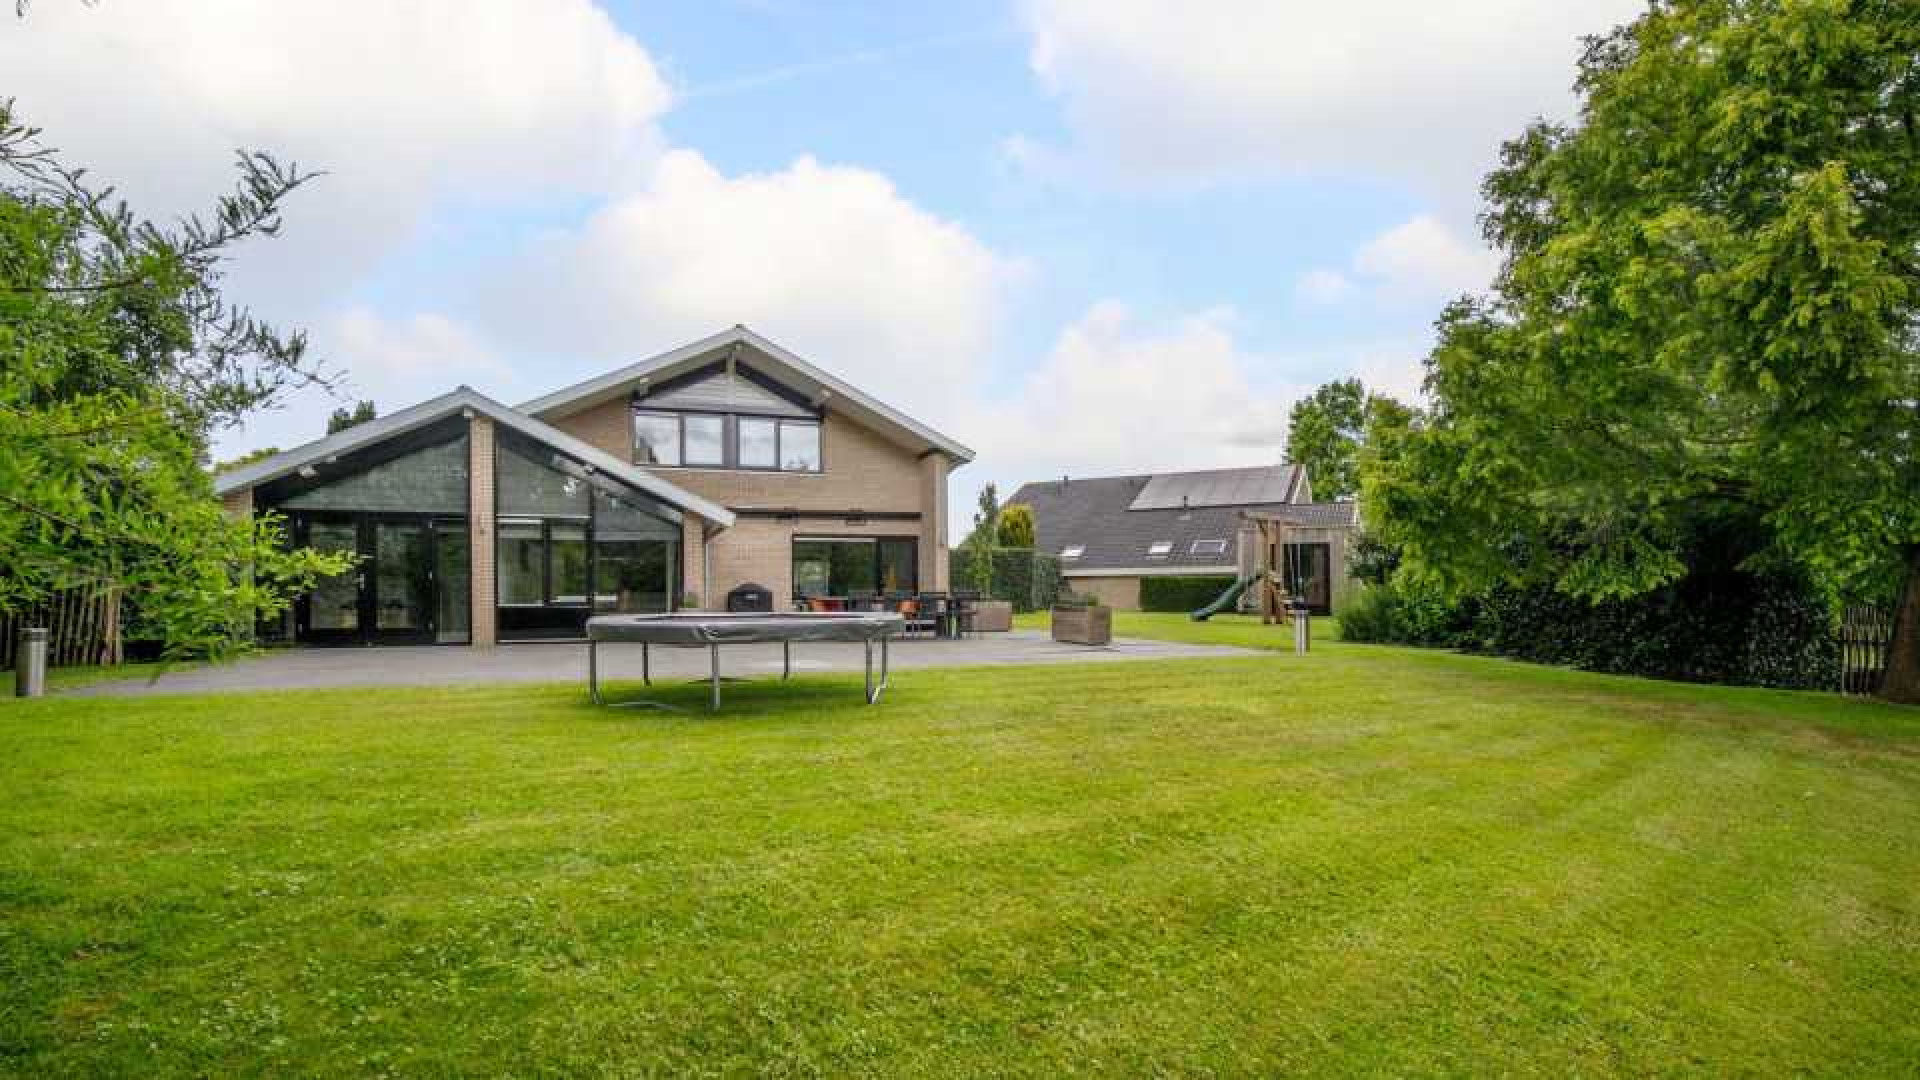 Villa Sven Kramer met vette winst verkocht. Zie foto's